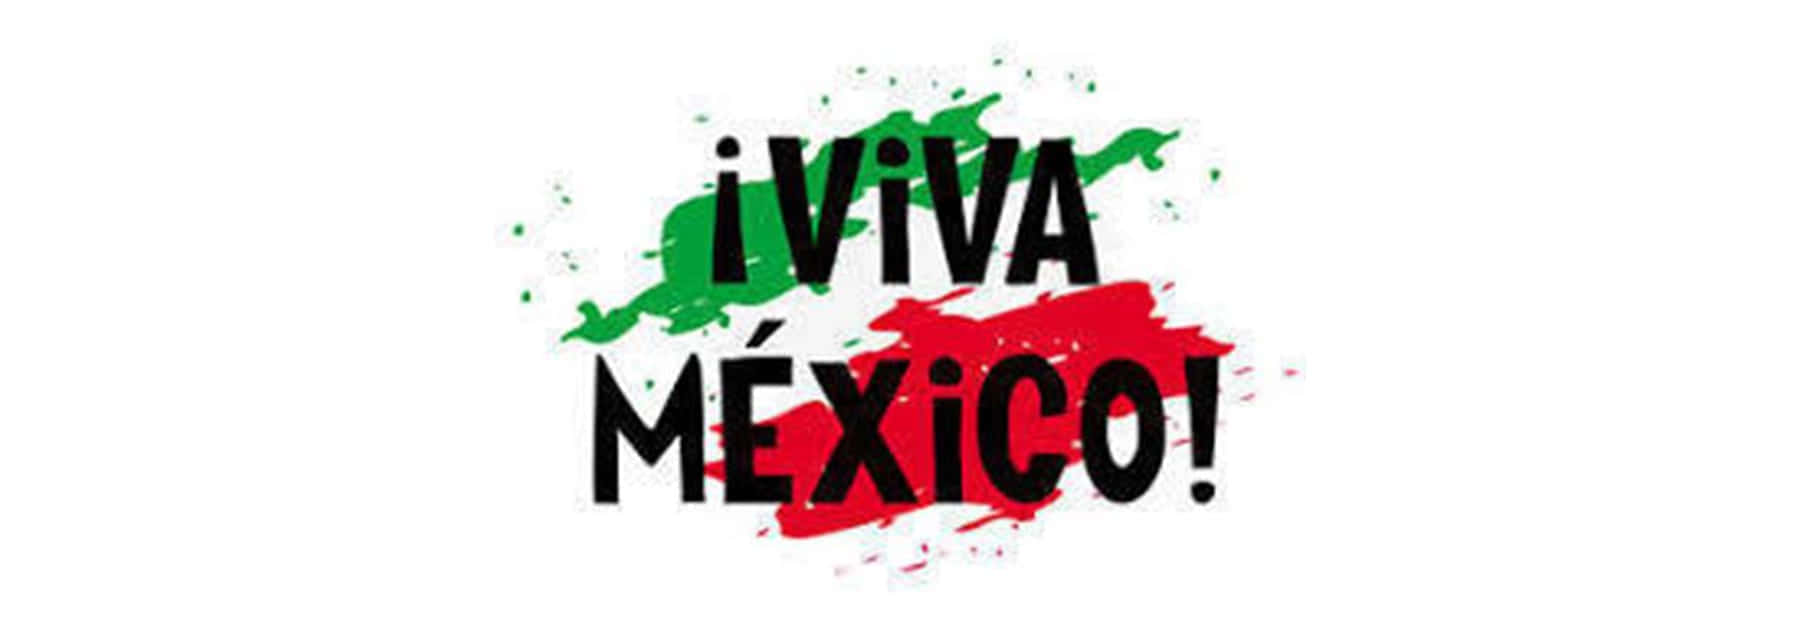 Celebrate With Viva Mexico! Background